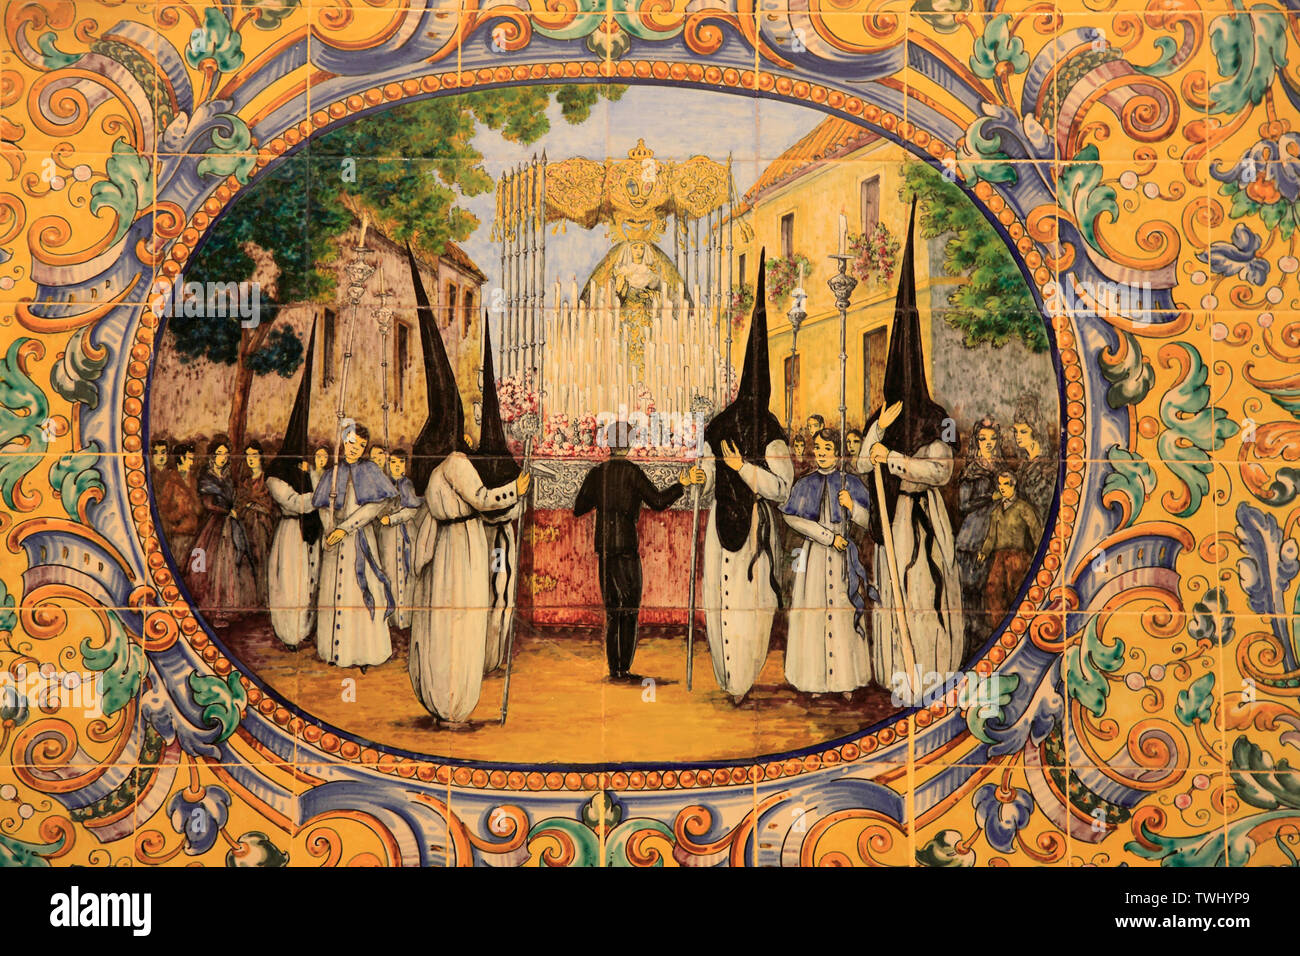 Spain; Andalusia; Seville; Triana, Semana Santa, ceramic tile image, Stock Photo